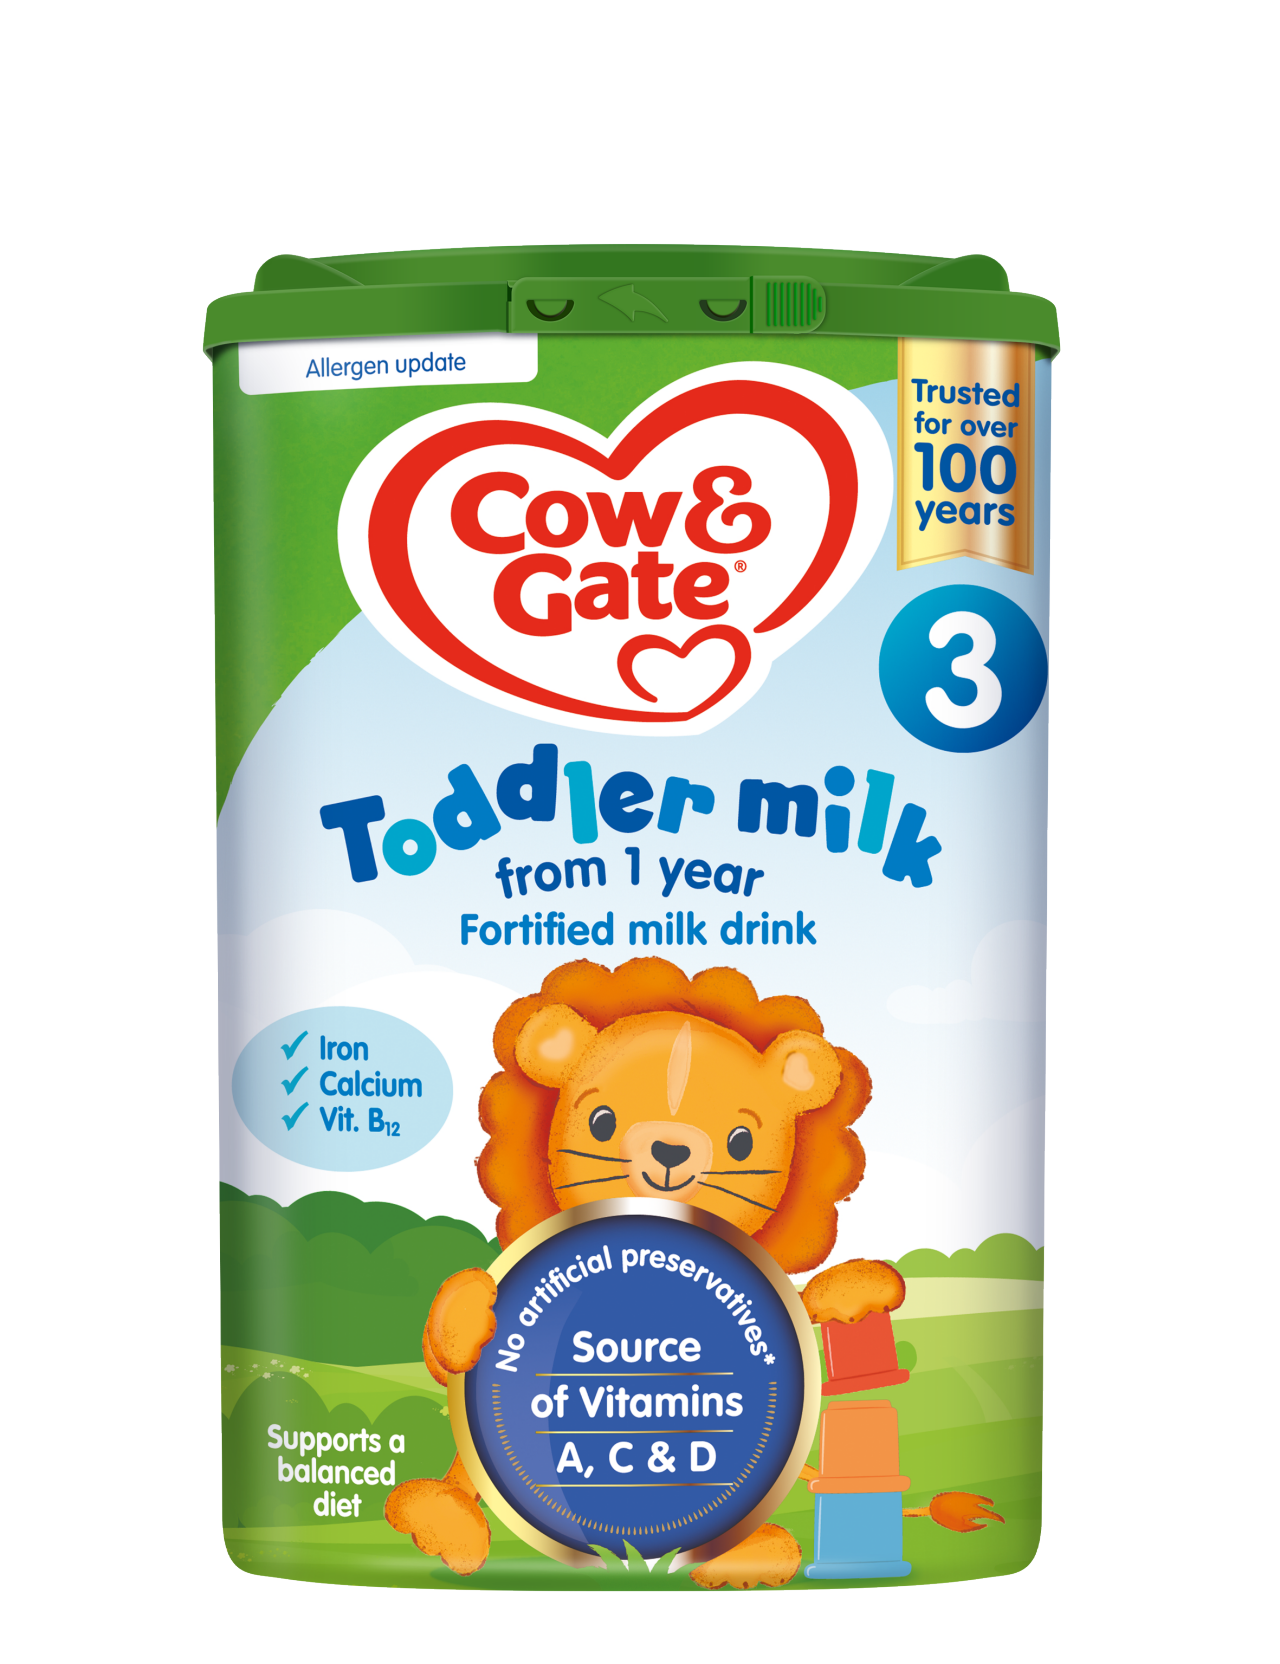 Cow & Gate Toddler Milk (1-2 years) (Powder)